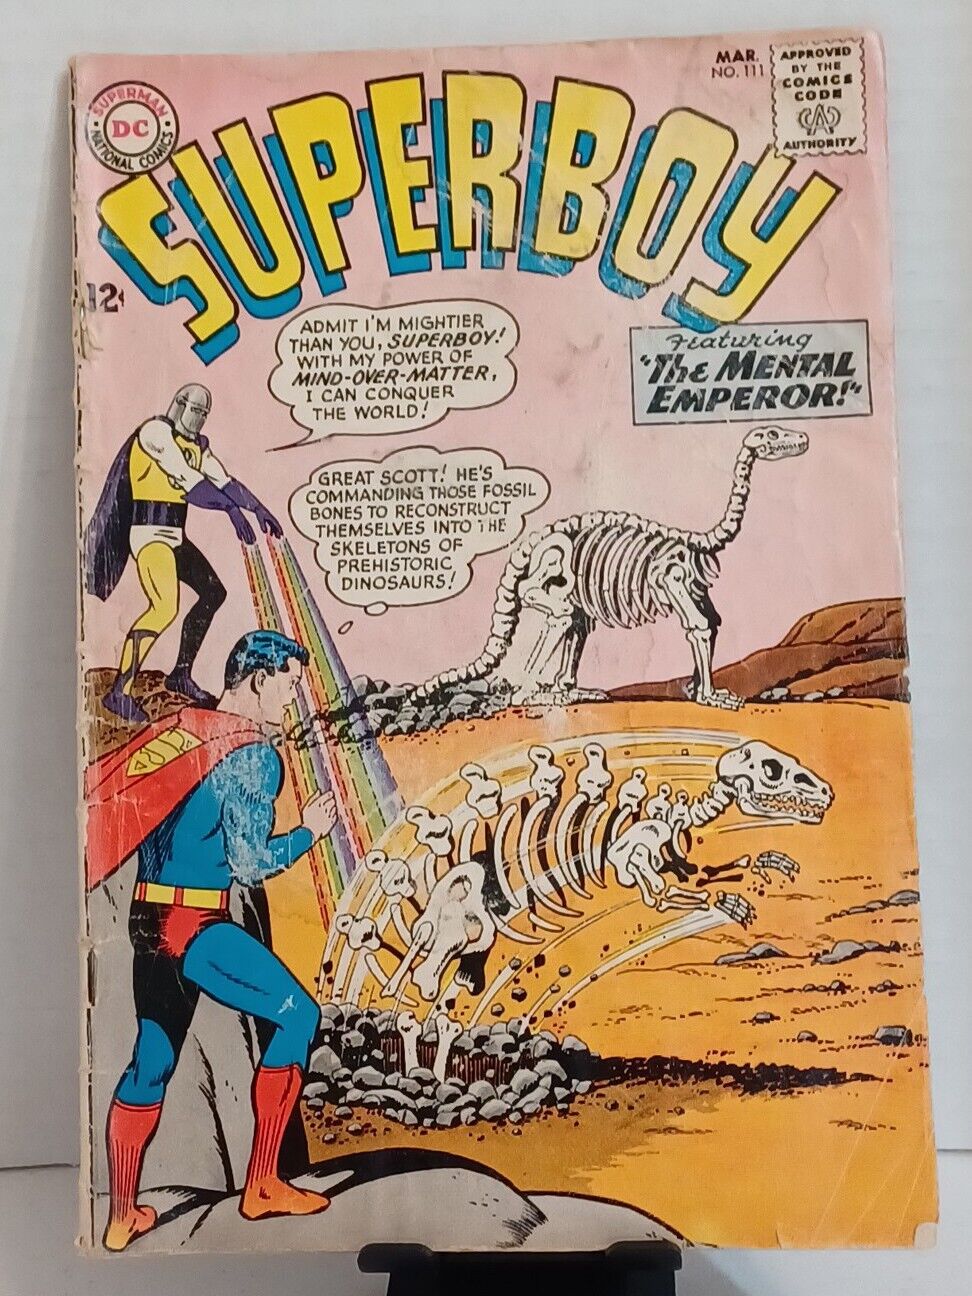 Superboy The Mental Emperor #111 DC Comics Superman March 1964 Silver Age 12c